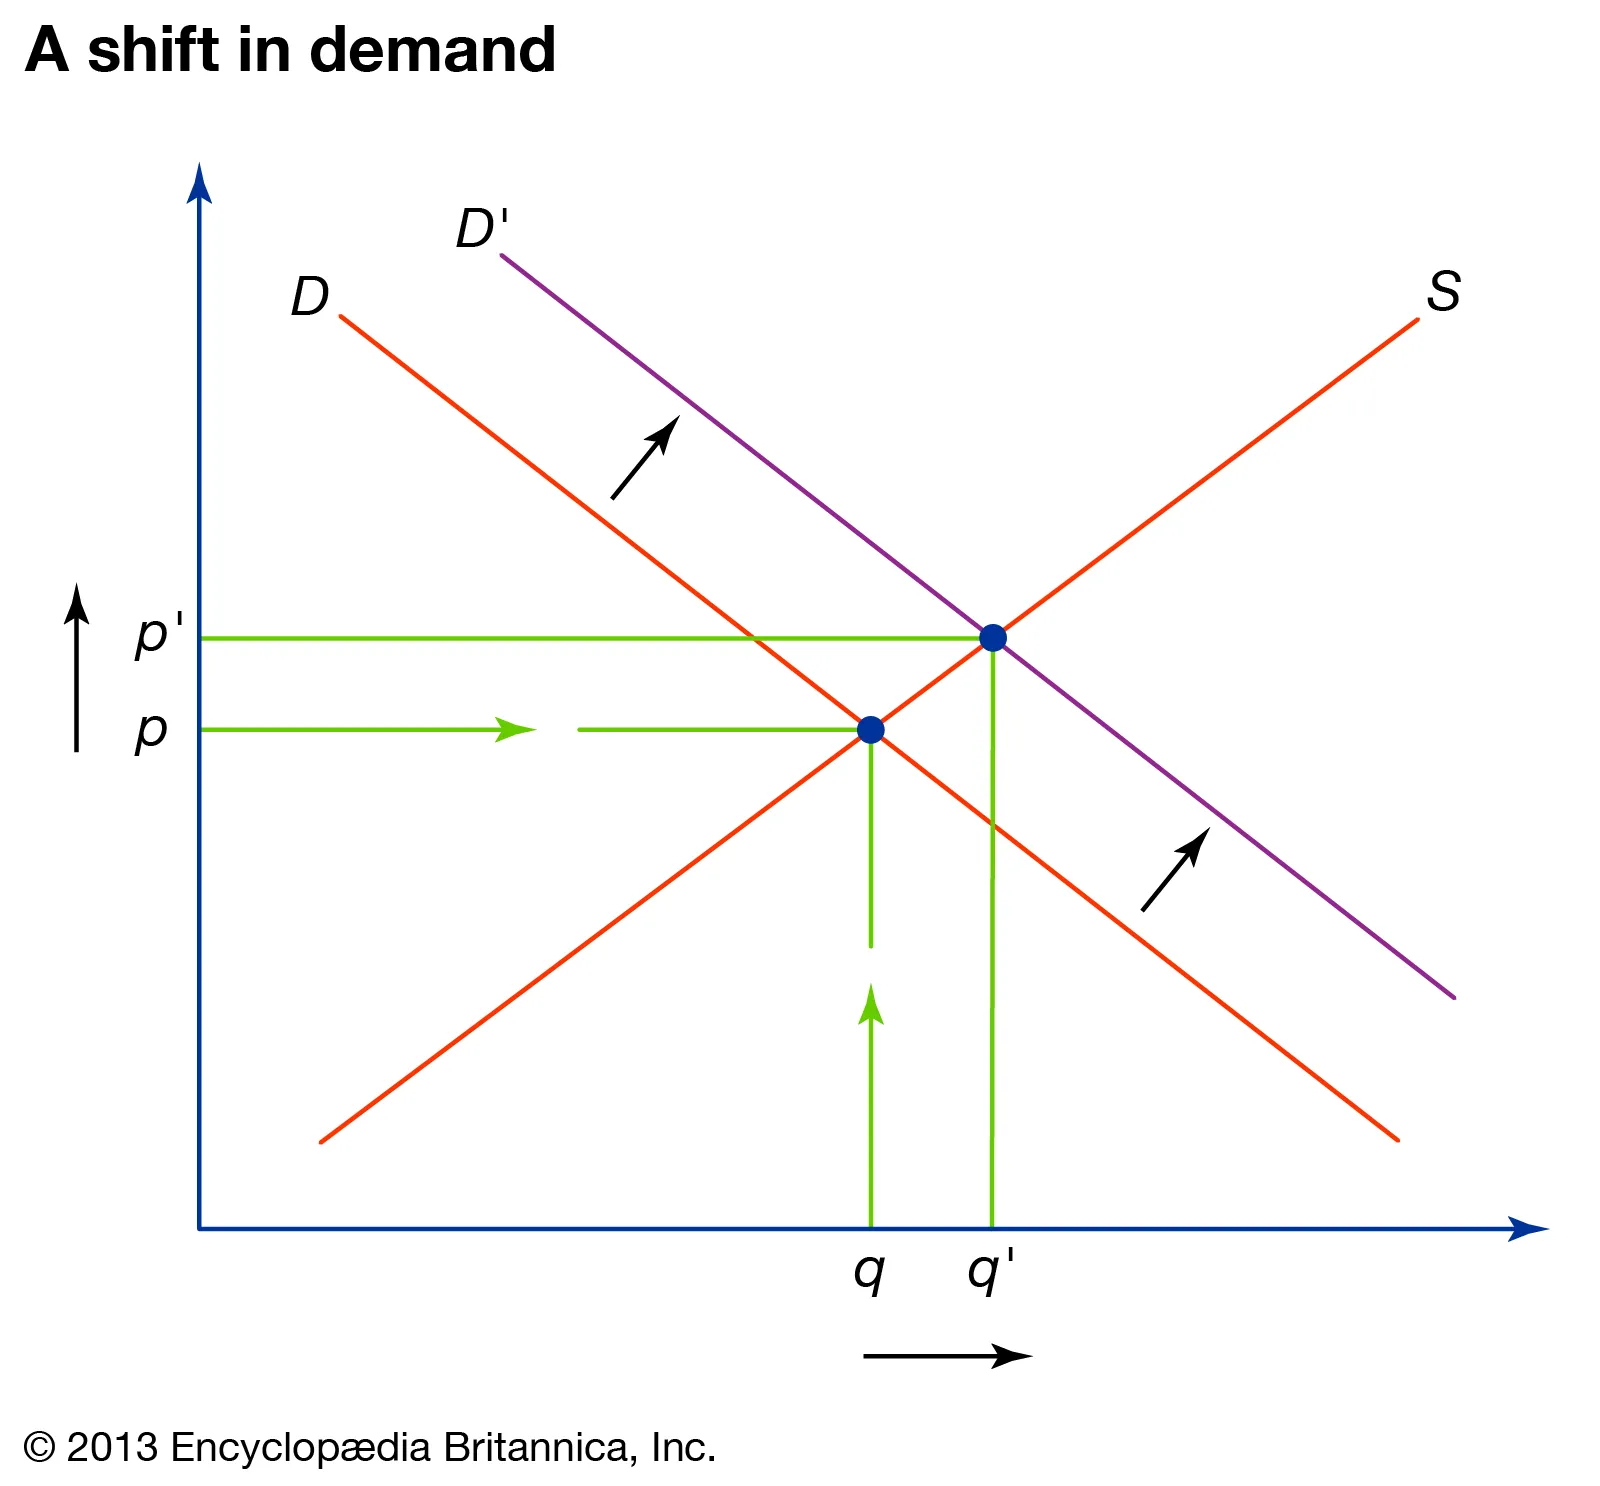 Fig. 1 Demand curve